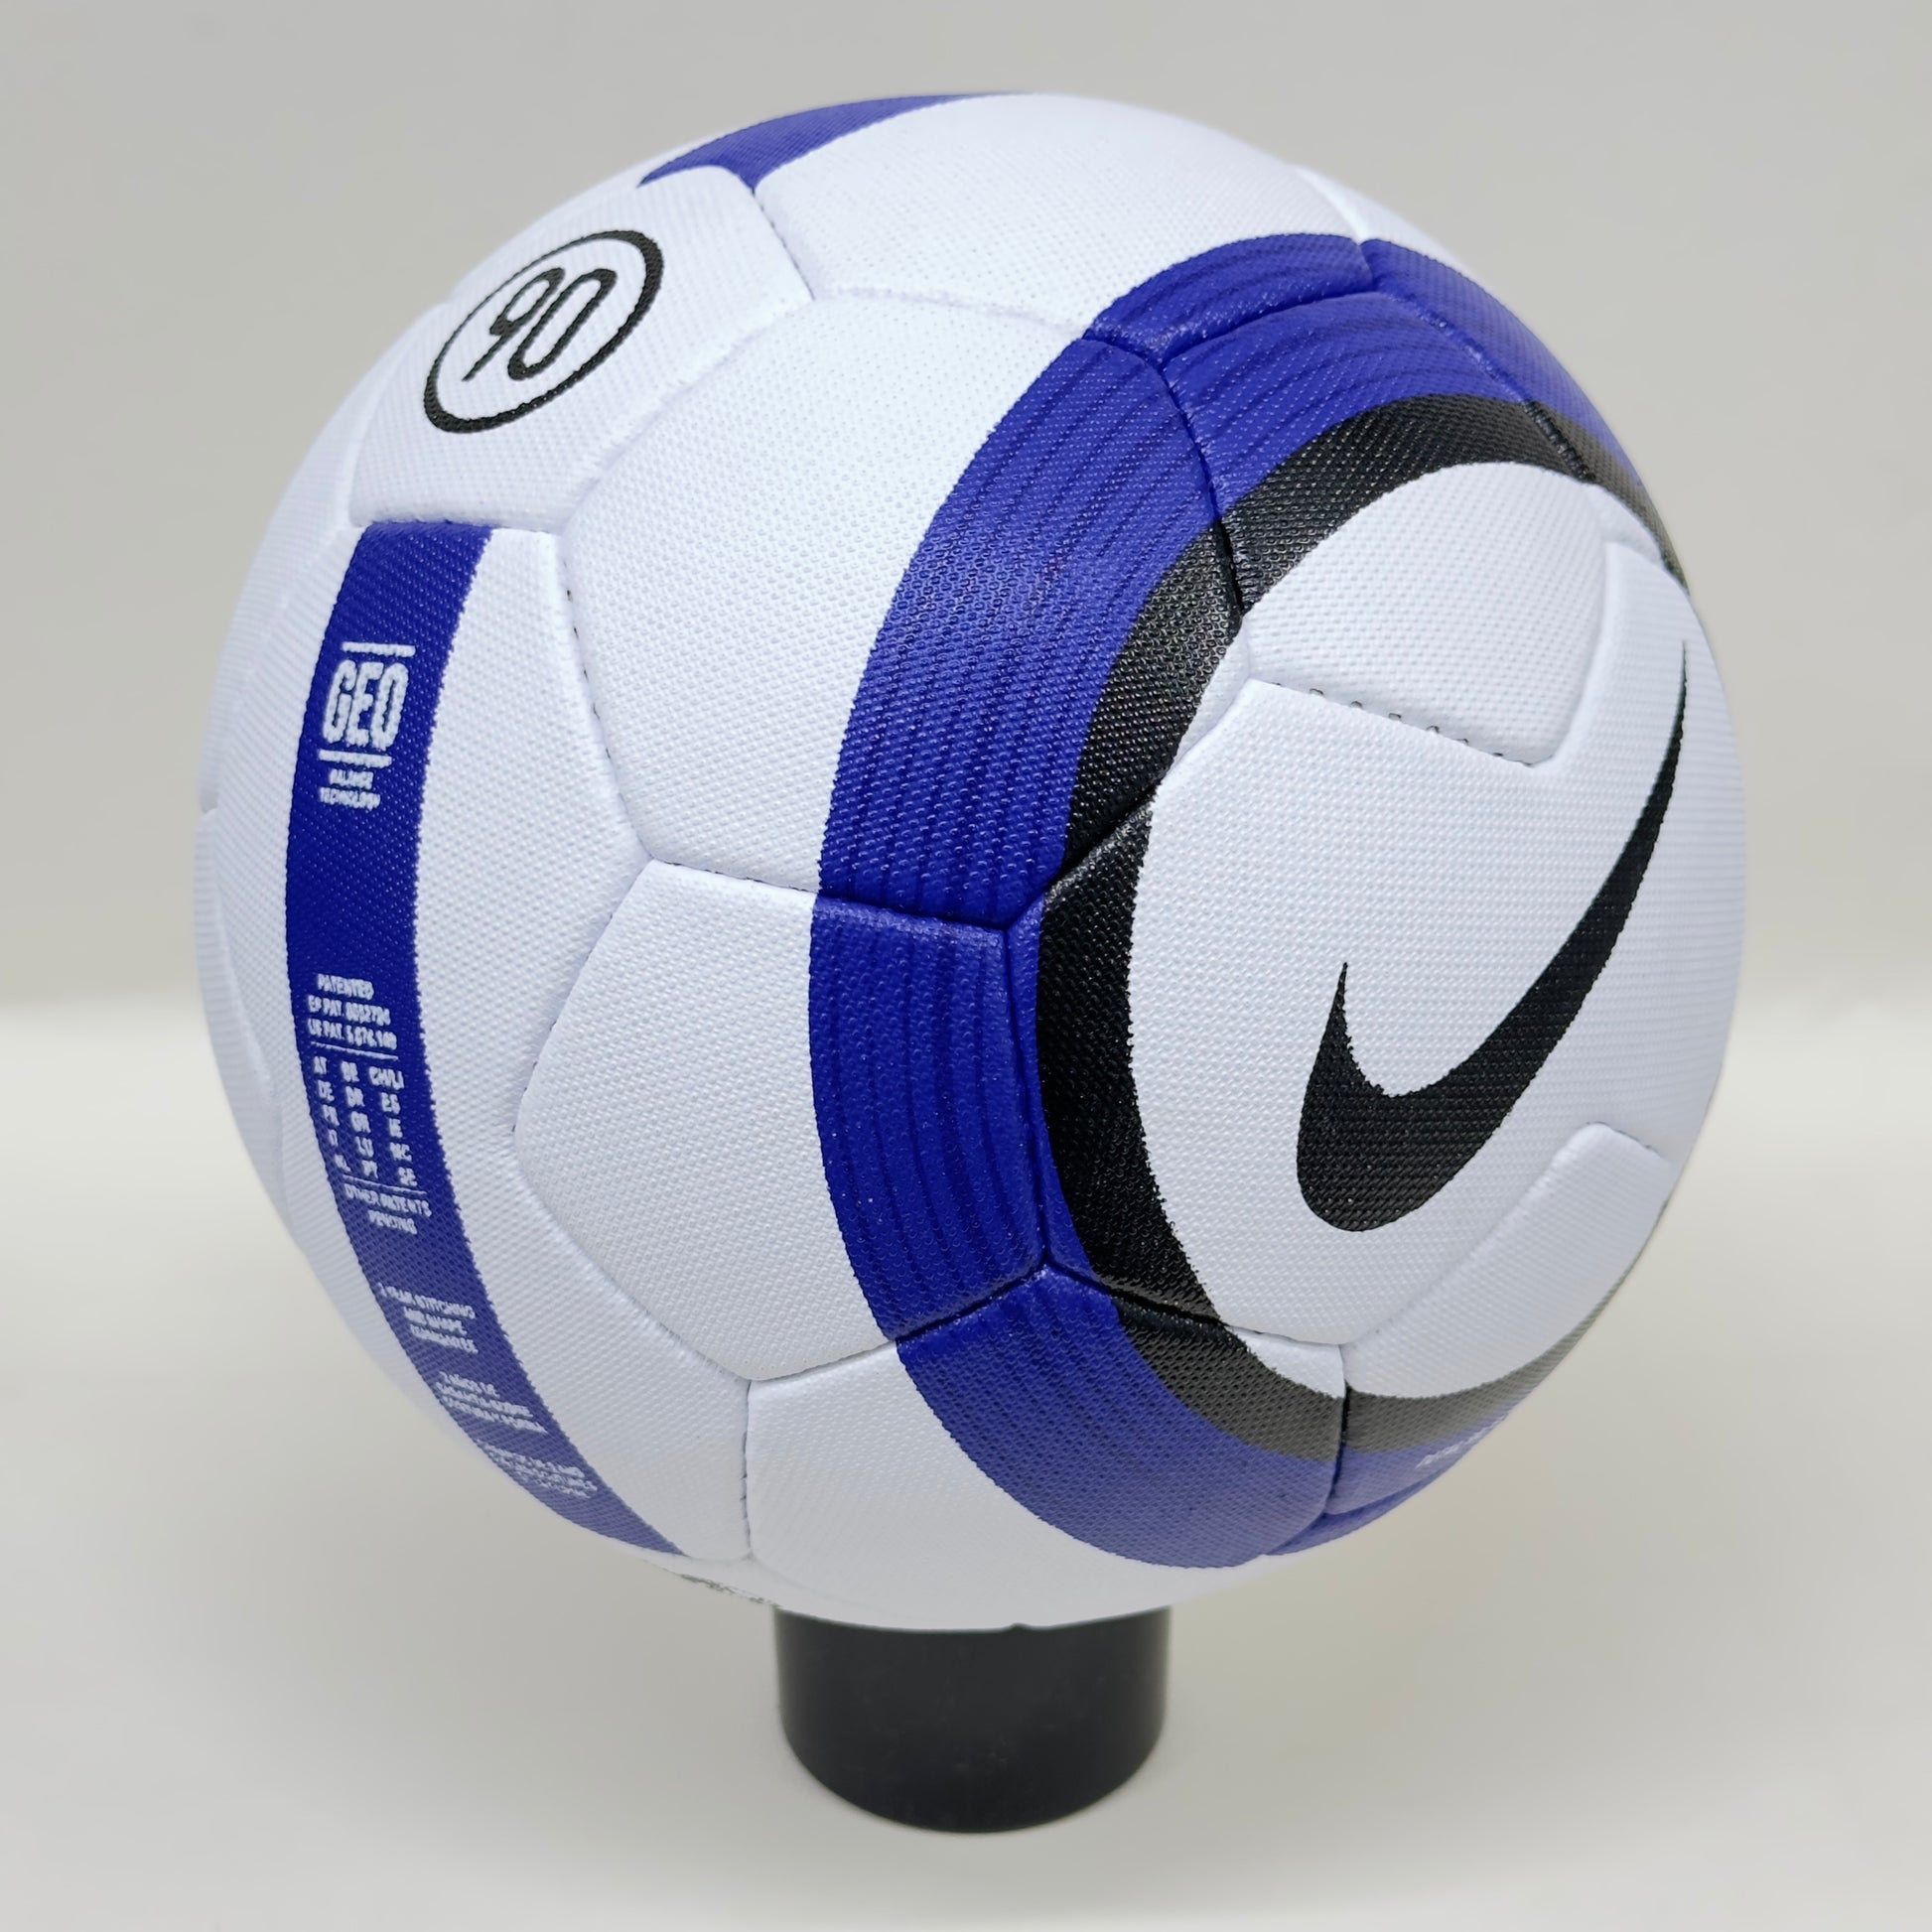 Nike Total 90 Aerow 1 | The FA Premier League l 2005 | Size 5 | Barclays 04